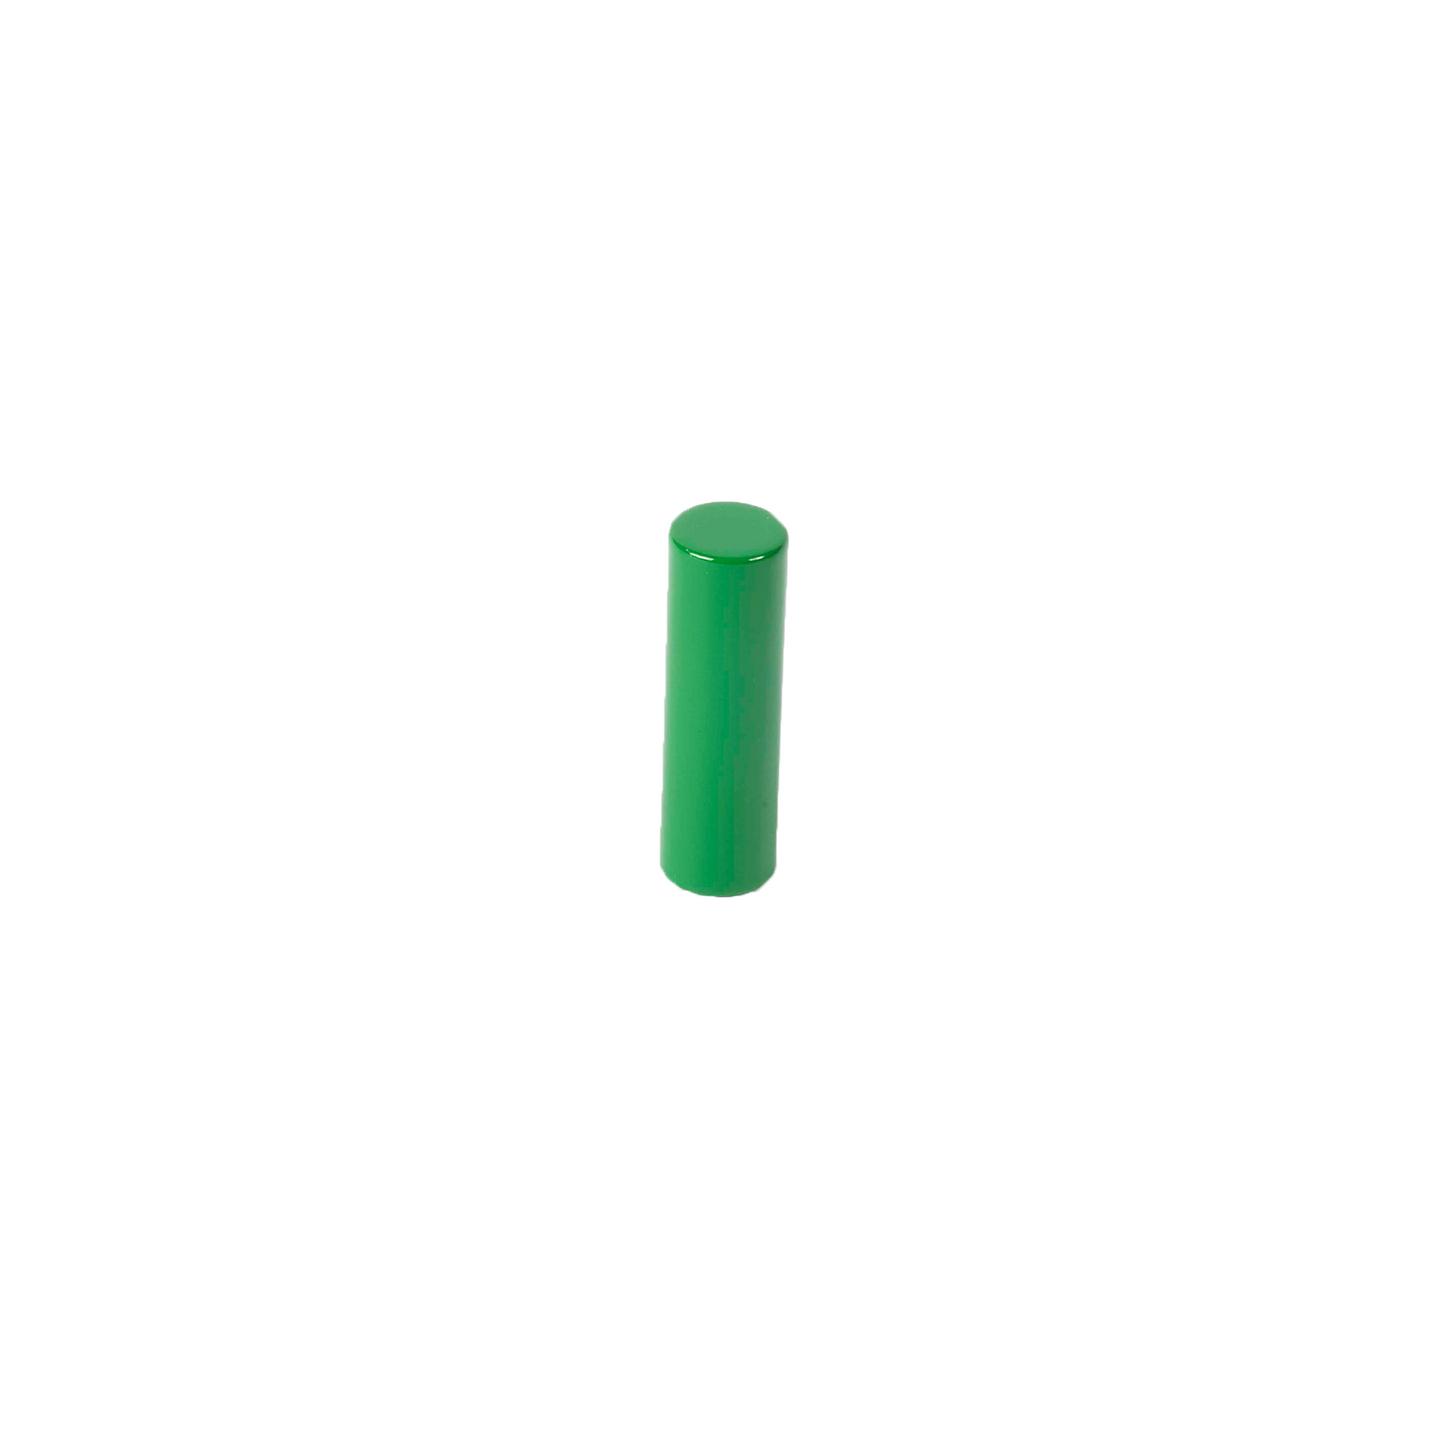 2nd unit green cylinder - Nienhuis AMI